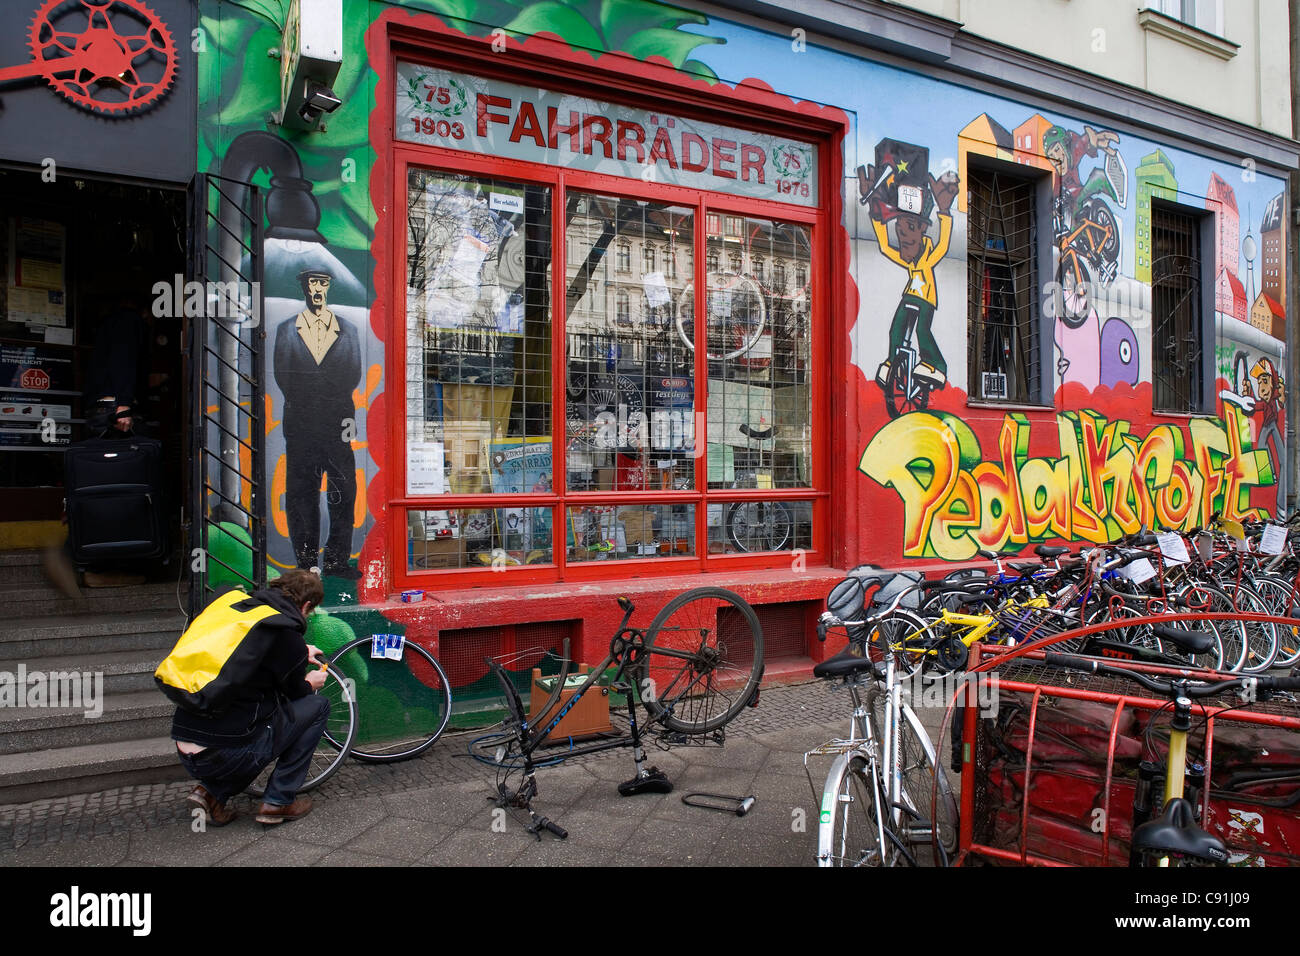 Bicycle shop germany -Fotos und -Bildmaterial in hoher Auflösung – Alamy